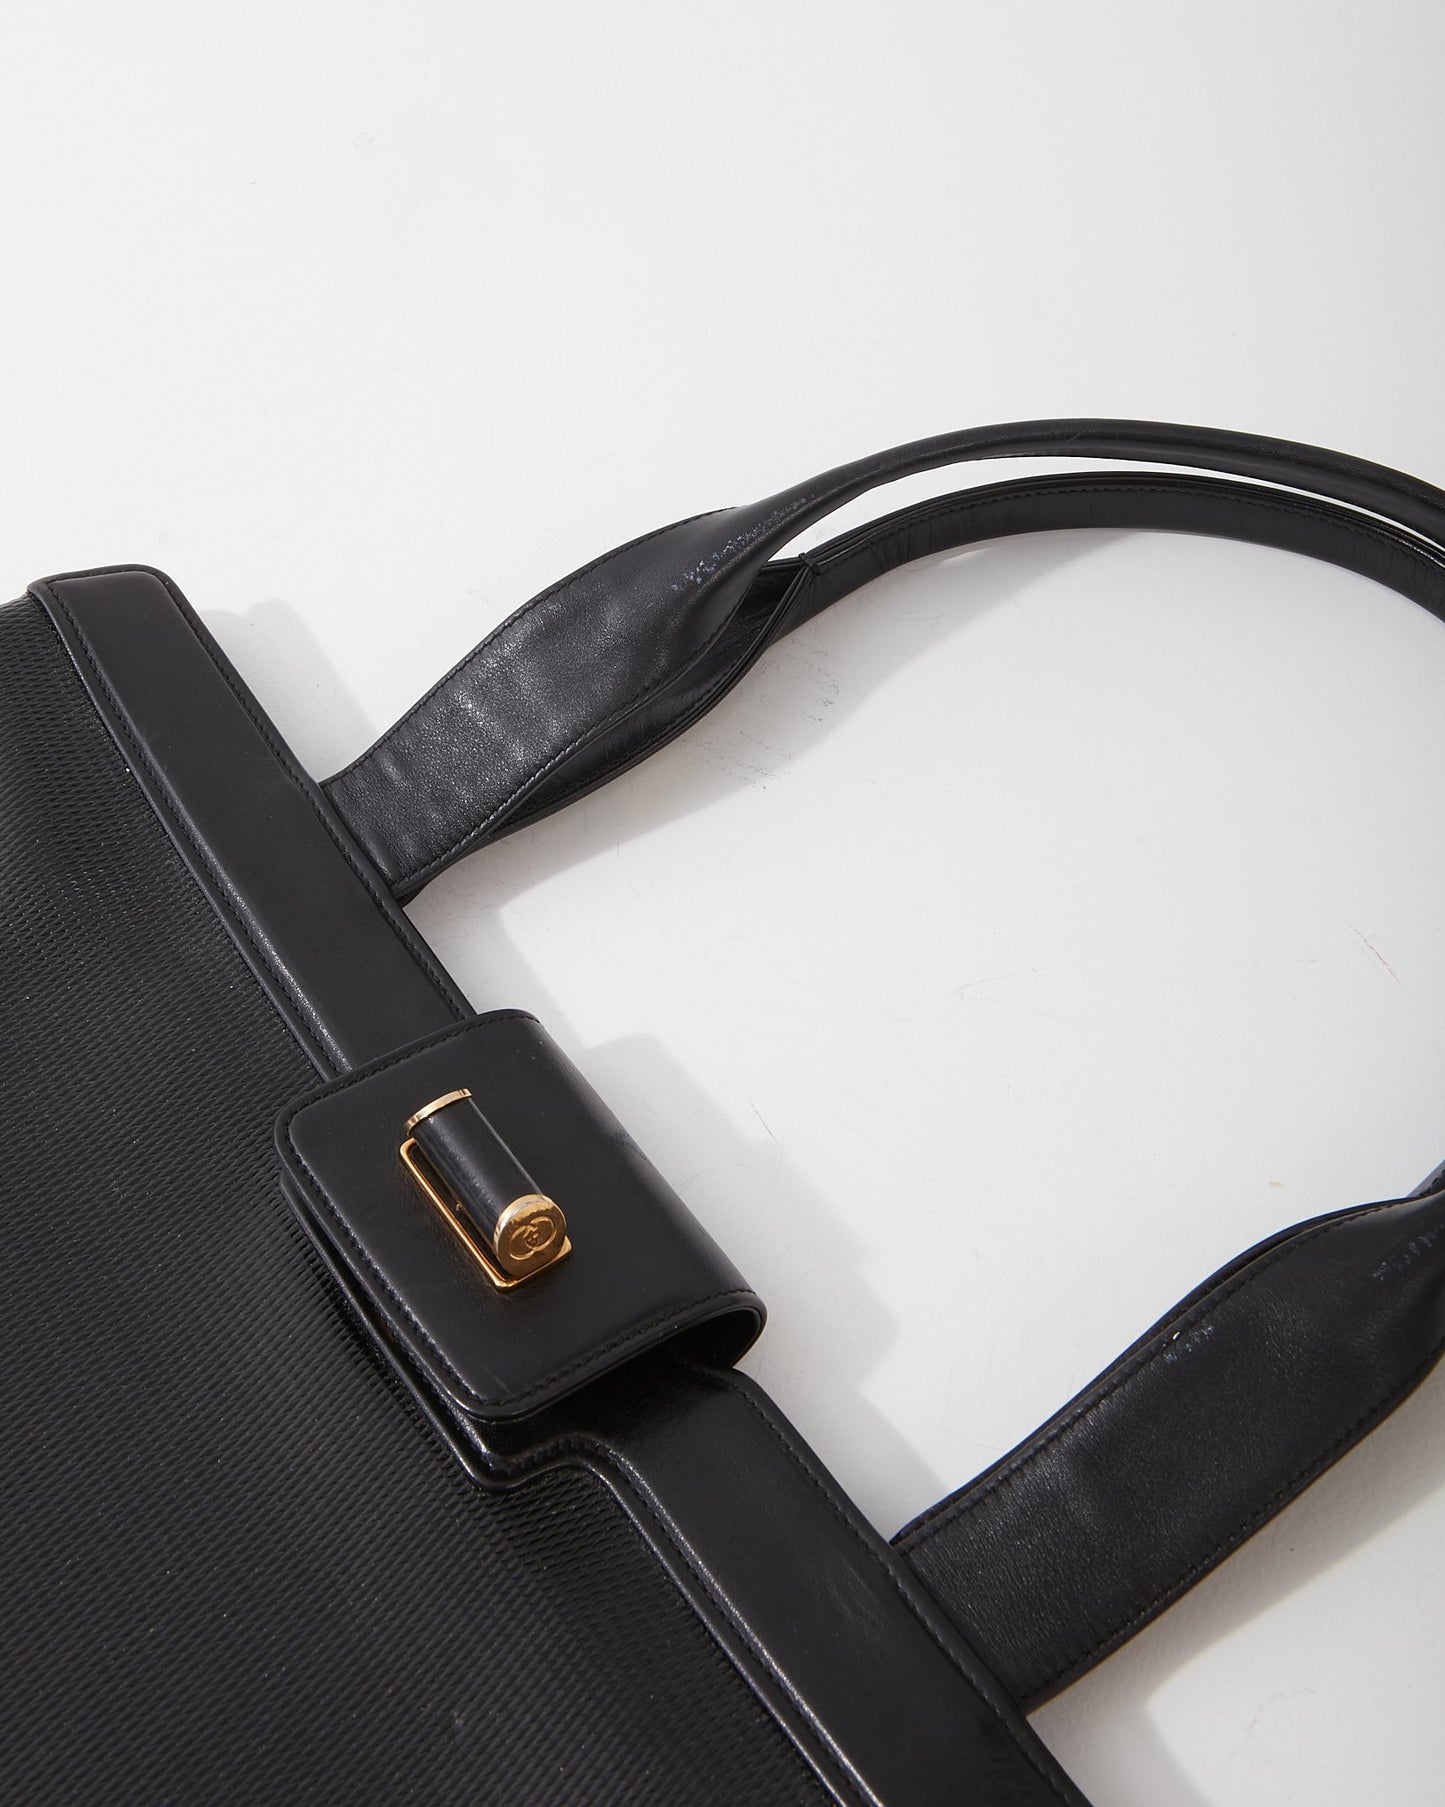 Gucci Black Textured Leather Vintage Top Handle Bag